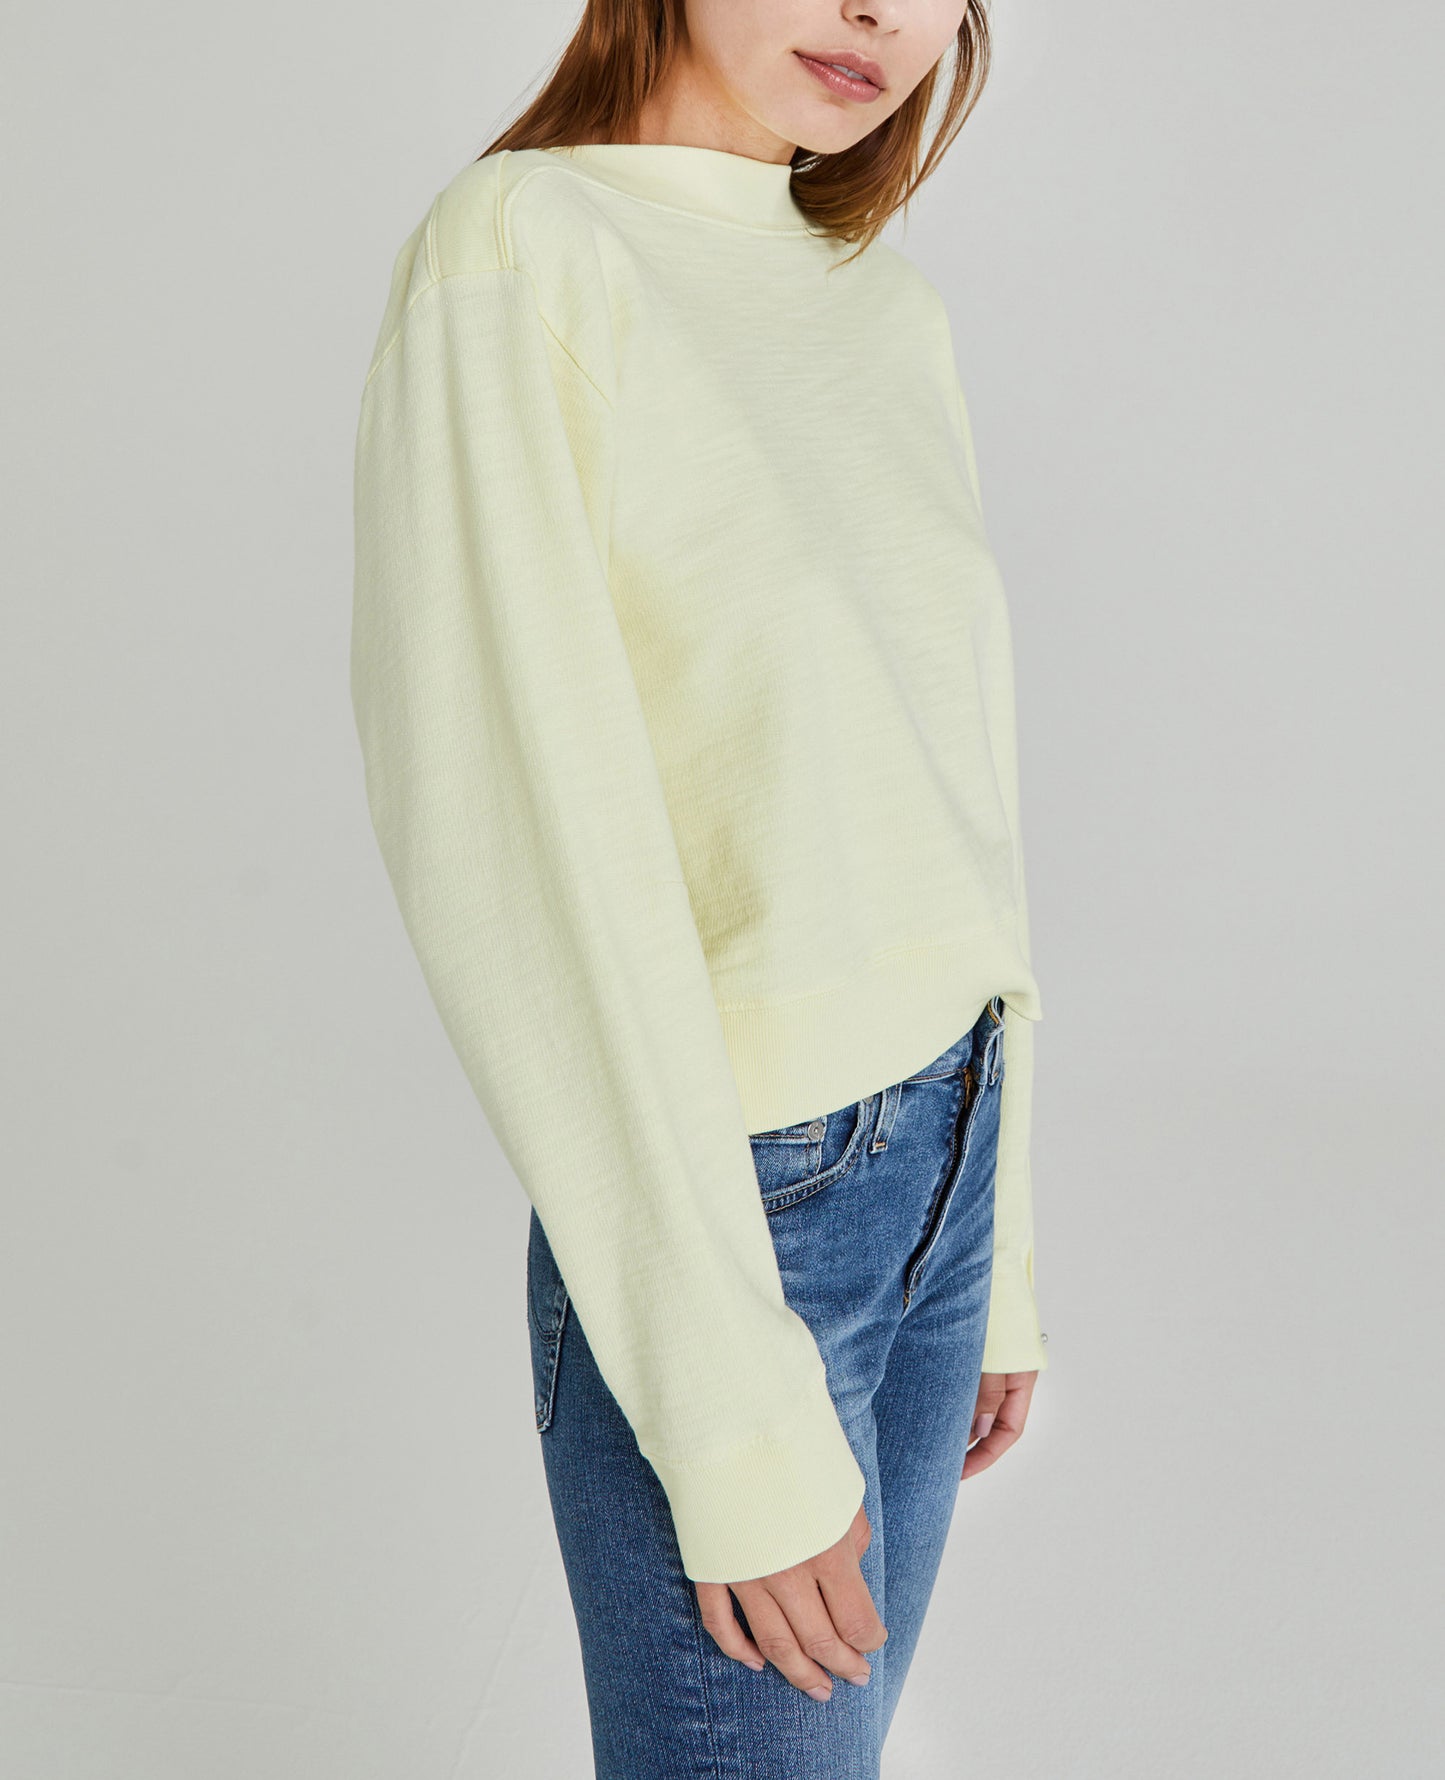 Cyra Sweatshirt Citrus Mist Snap Button Sweatshirt Women Tops Photo 5